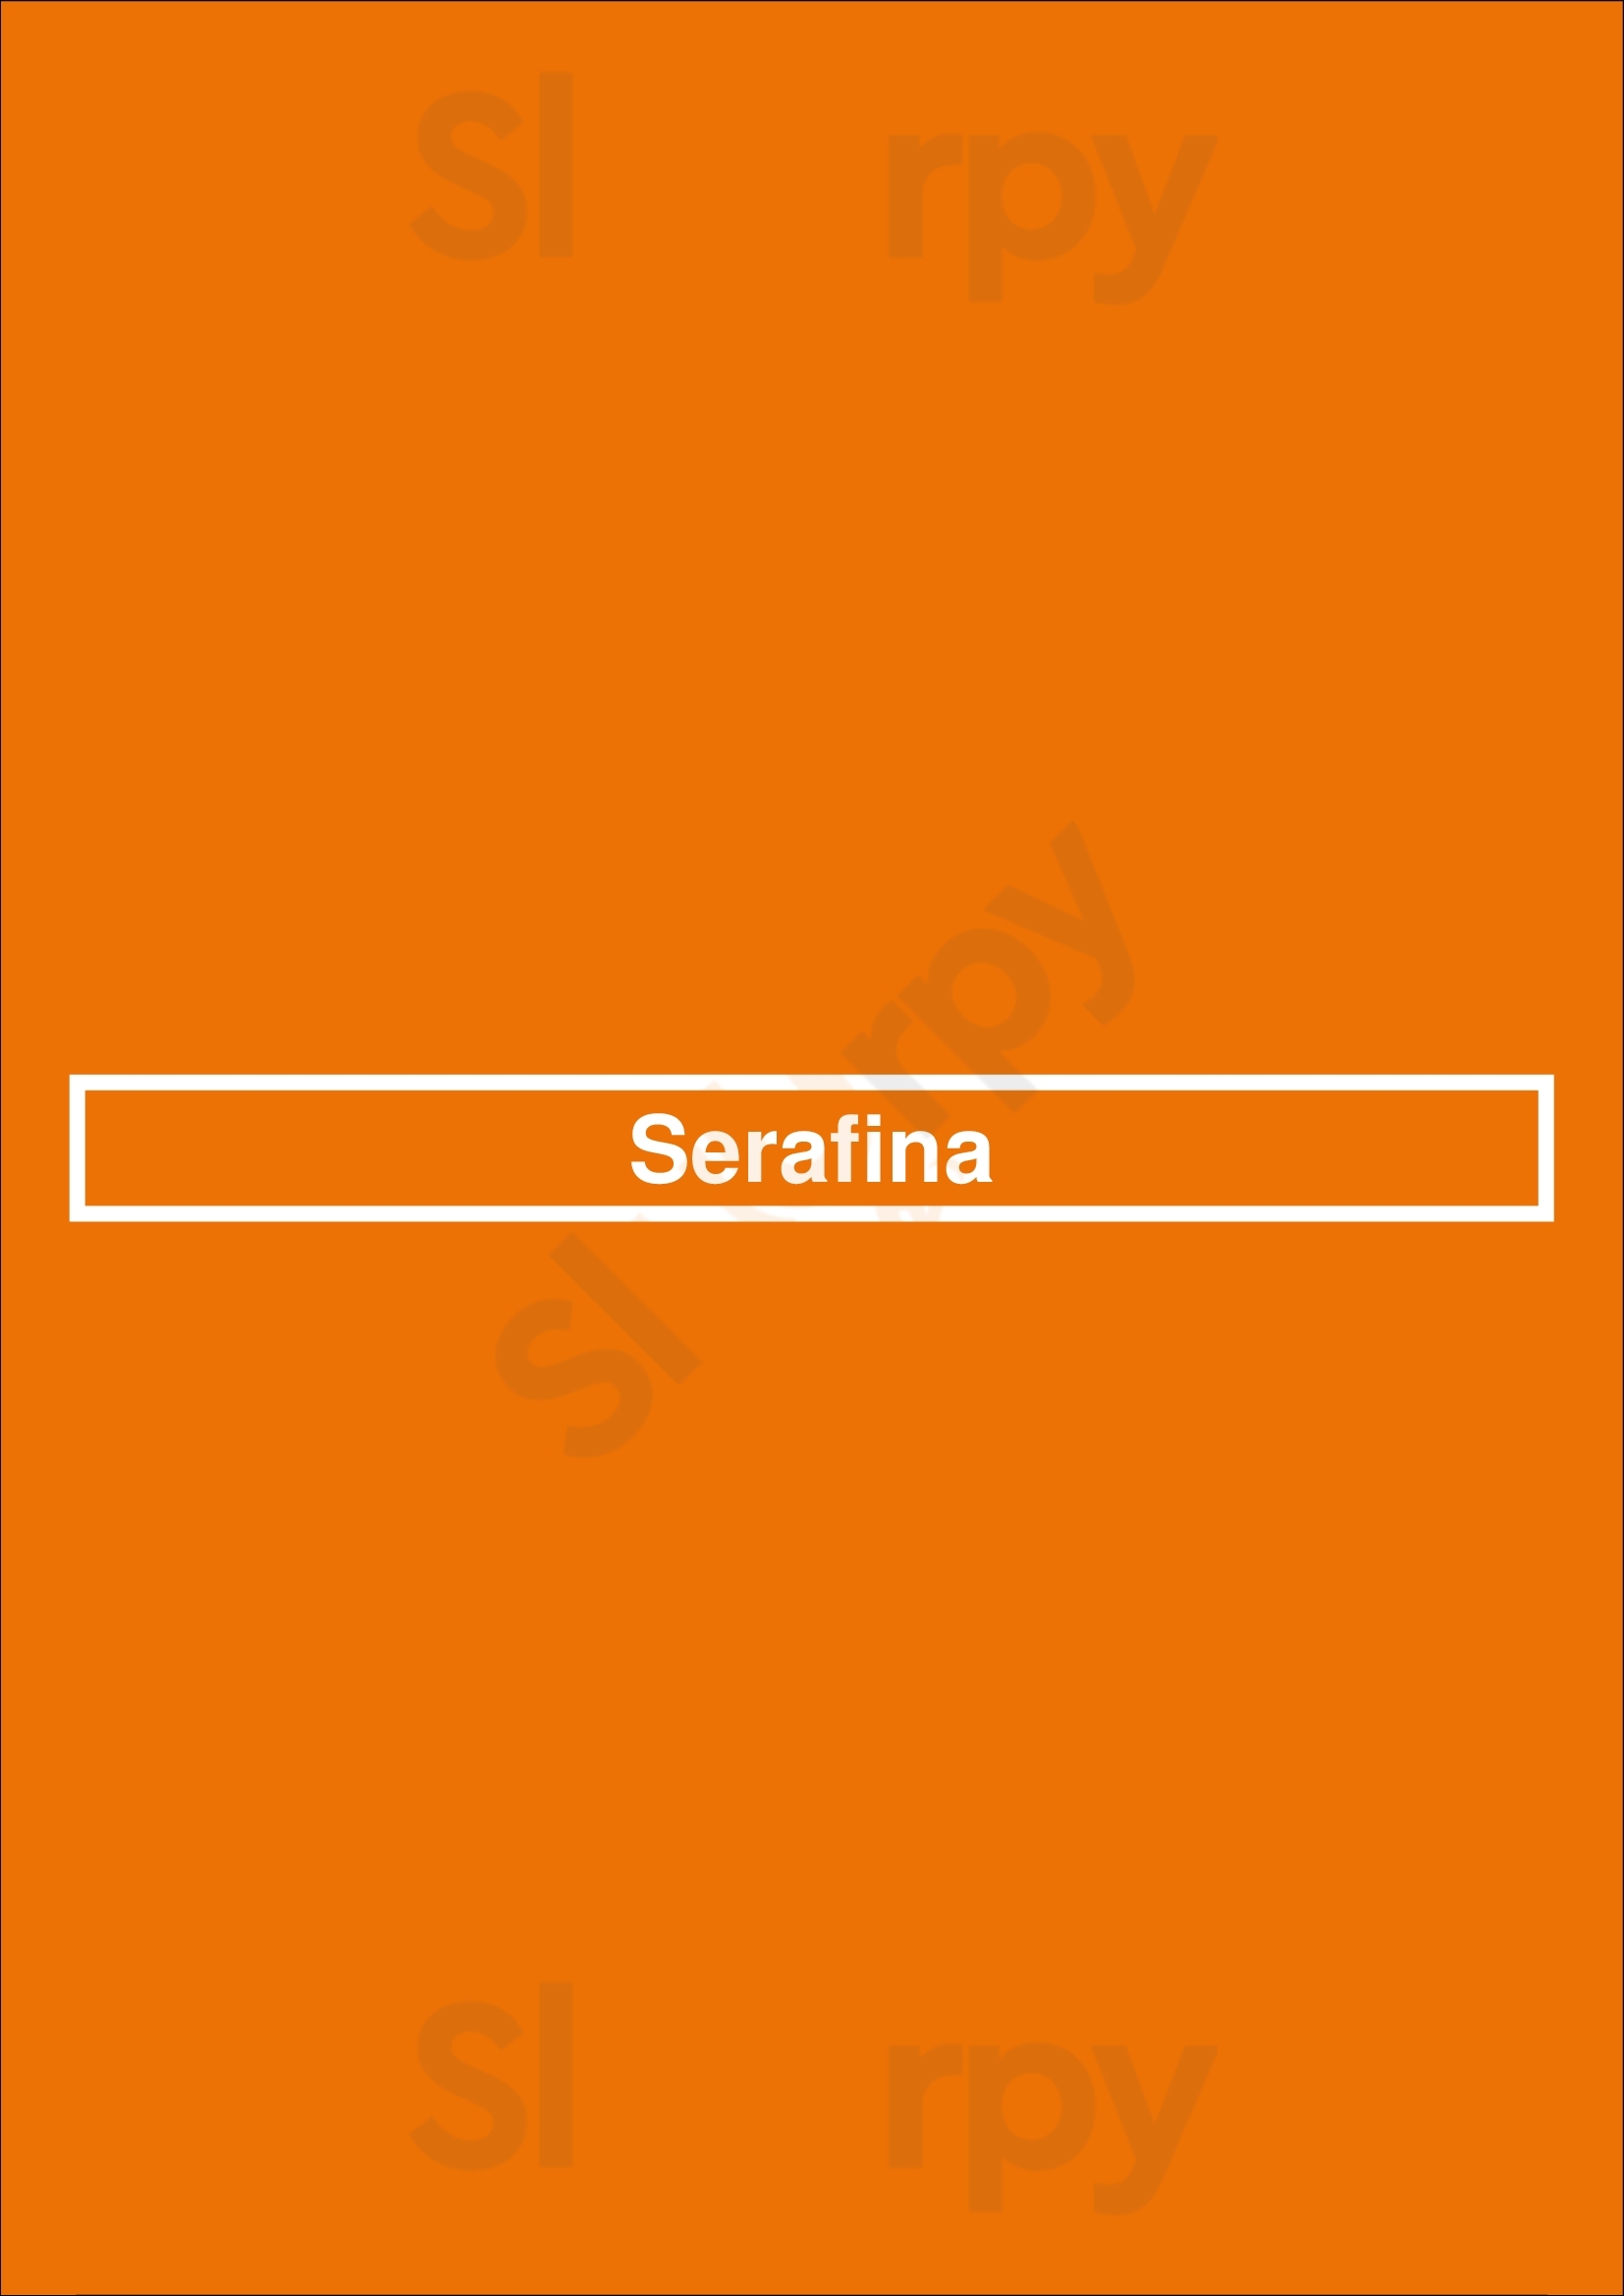 Serafina Boston Menu - 1